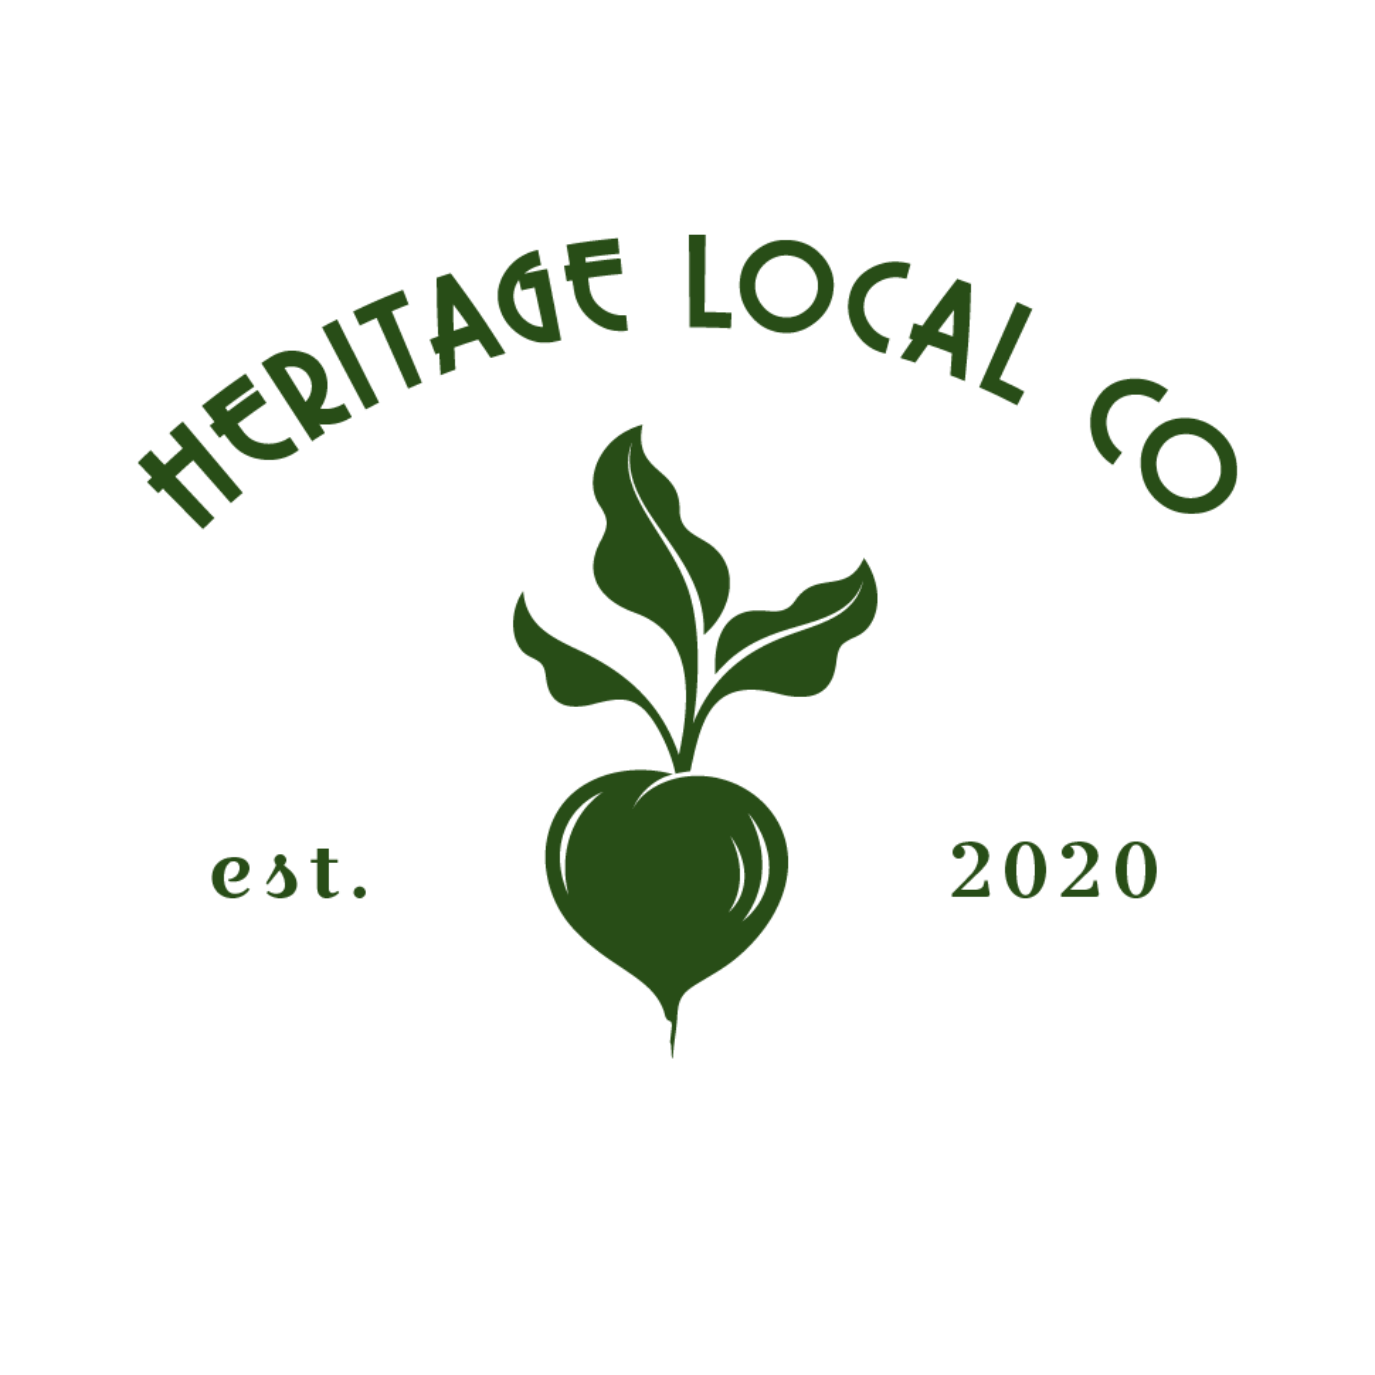 Heritage Local Co - Kearney Logo